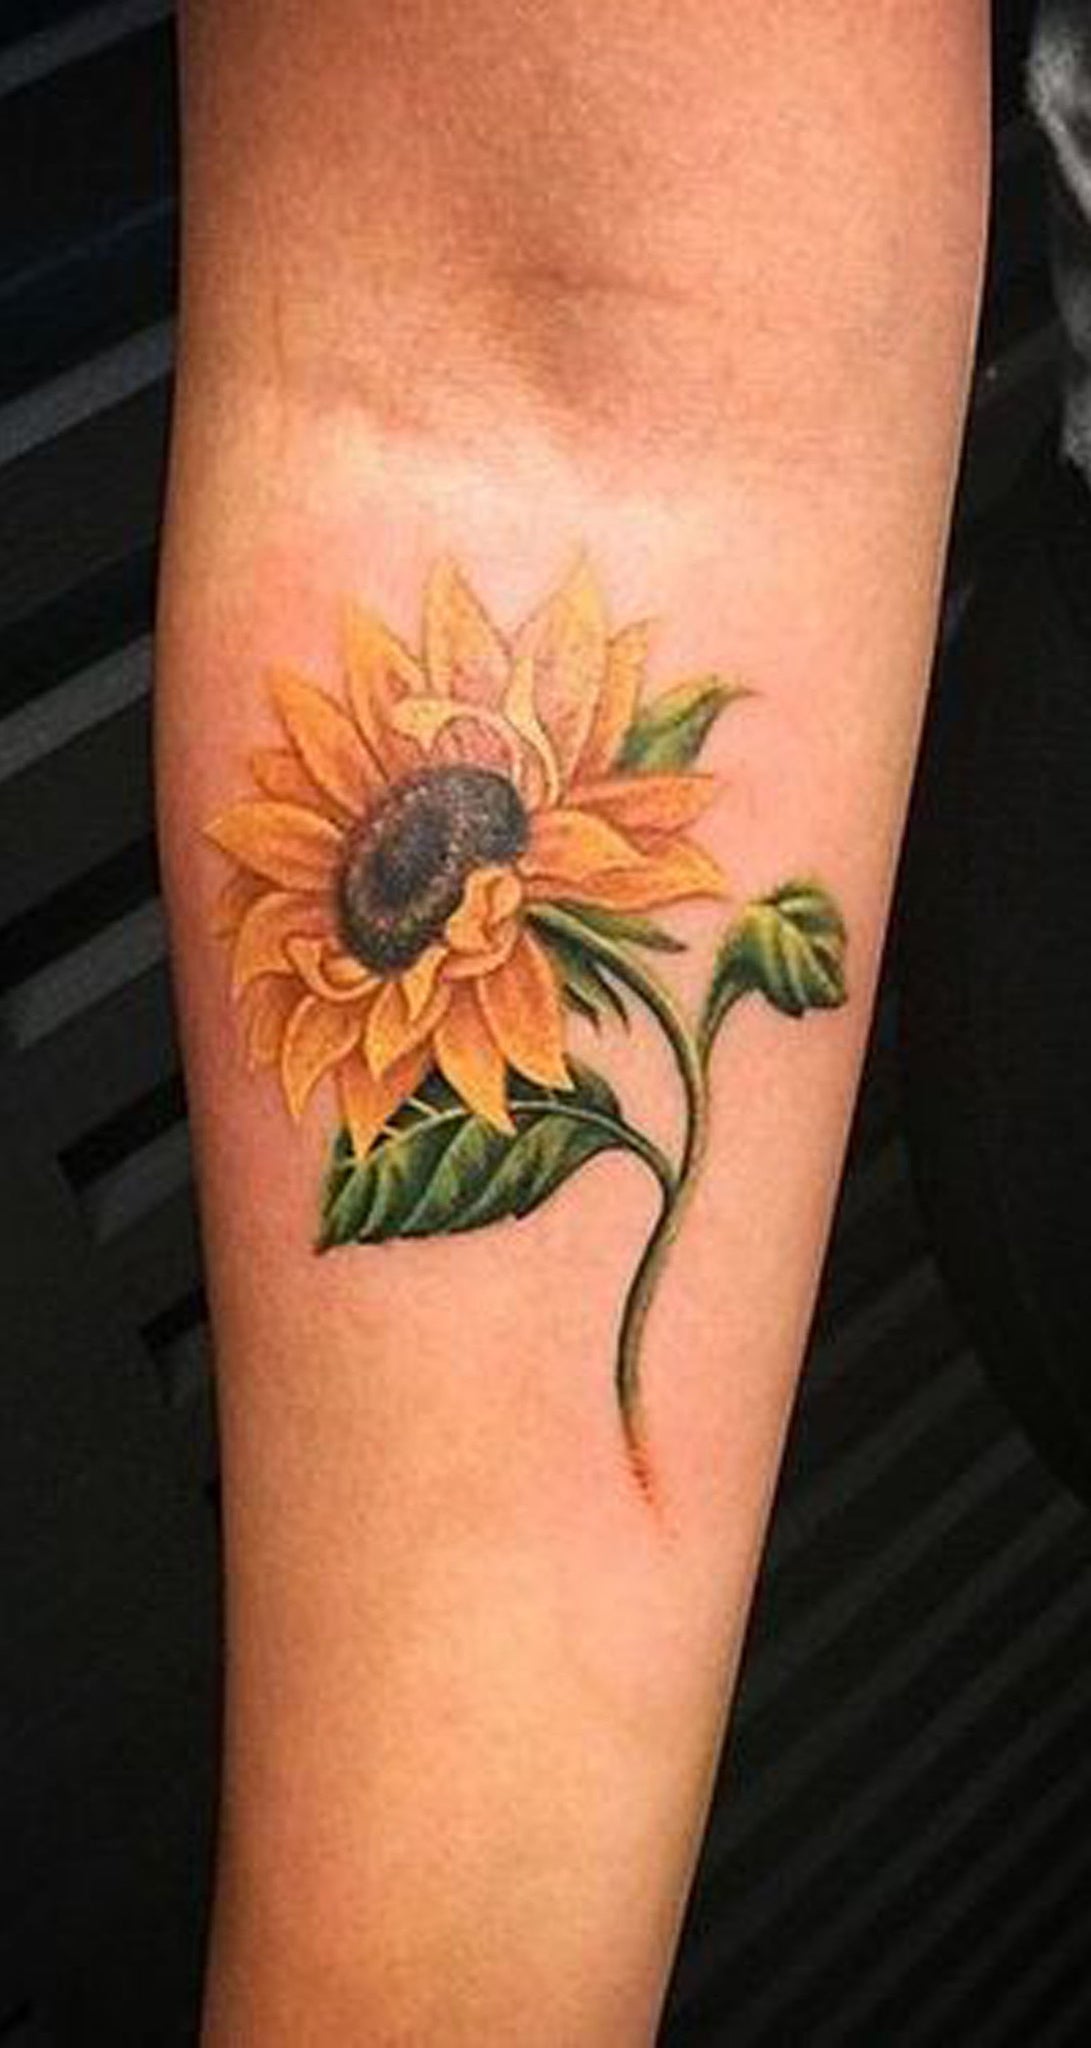 Small Colorful Sunflower Forearm Tattoo ideas for Women - Realistic Flower Arm Tat - Pequeñas ideas coloridas del tatuaje del antebrazo de girasol - www.MyBodiArt.com 